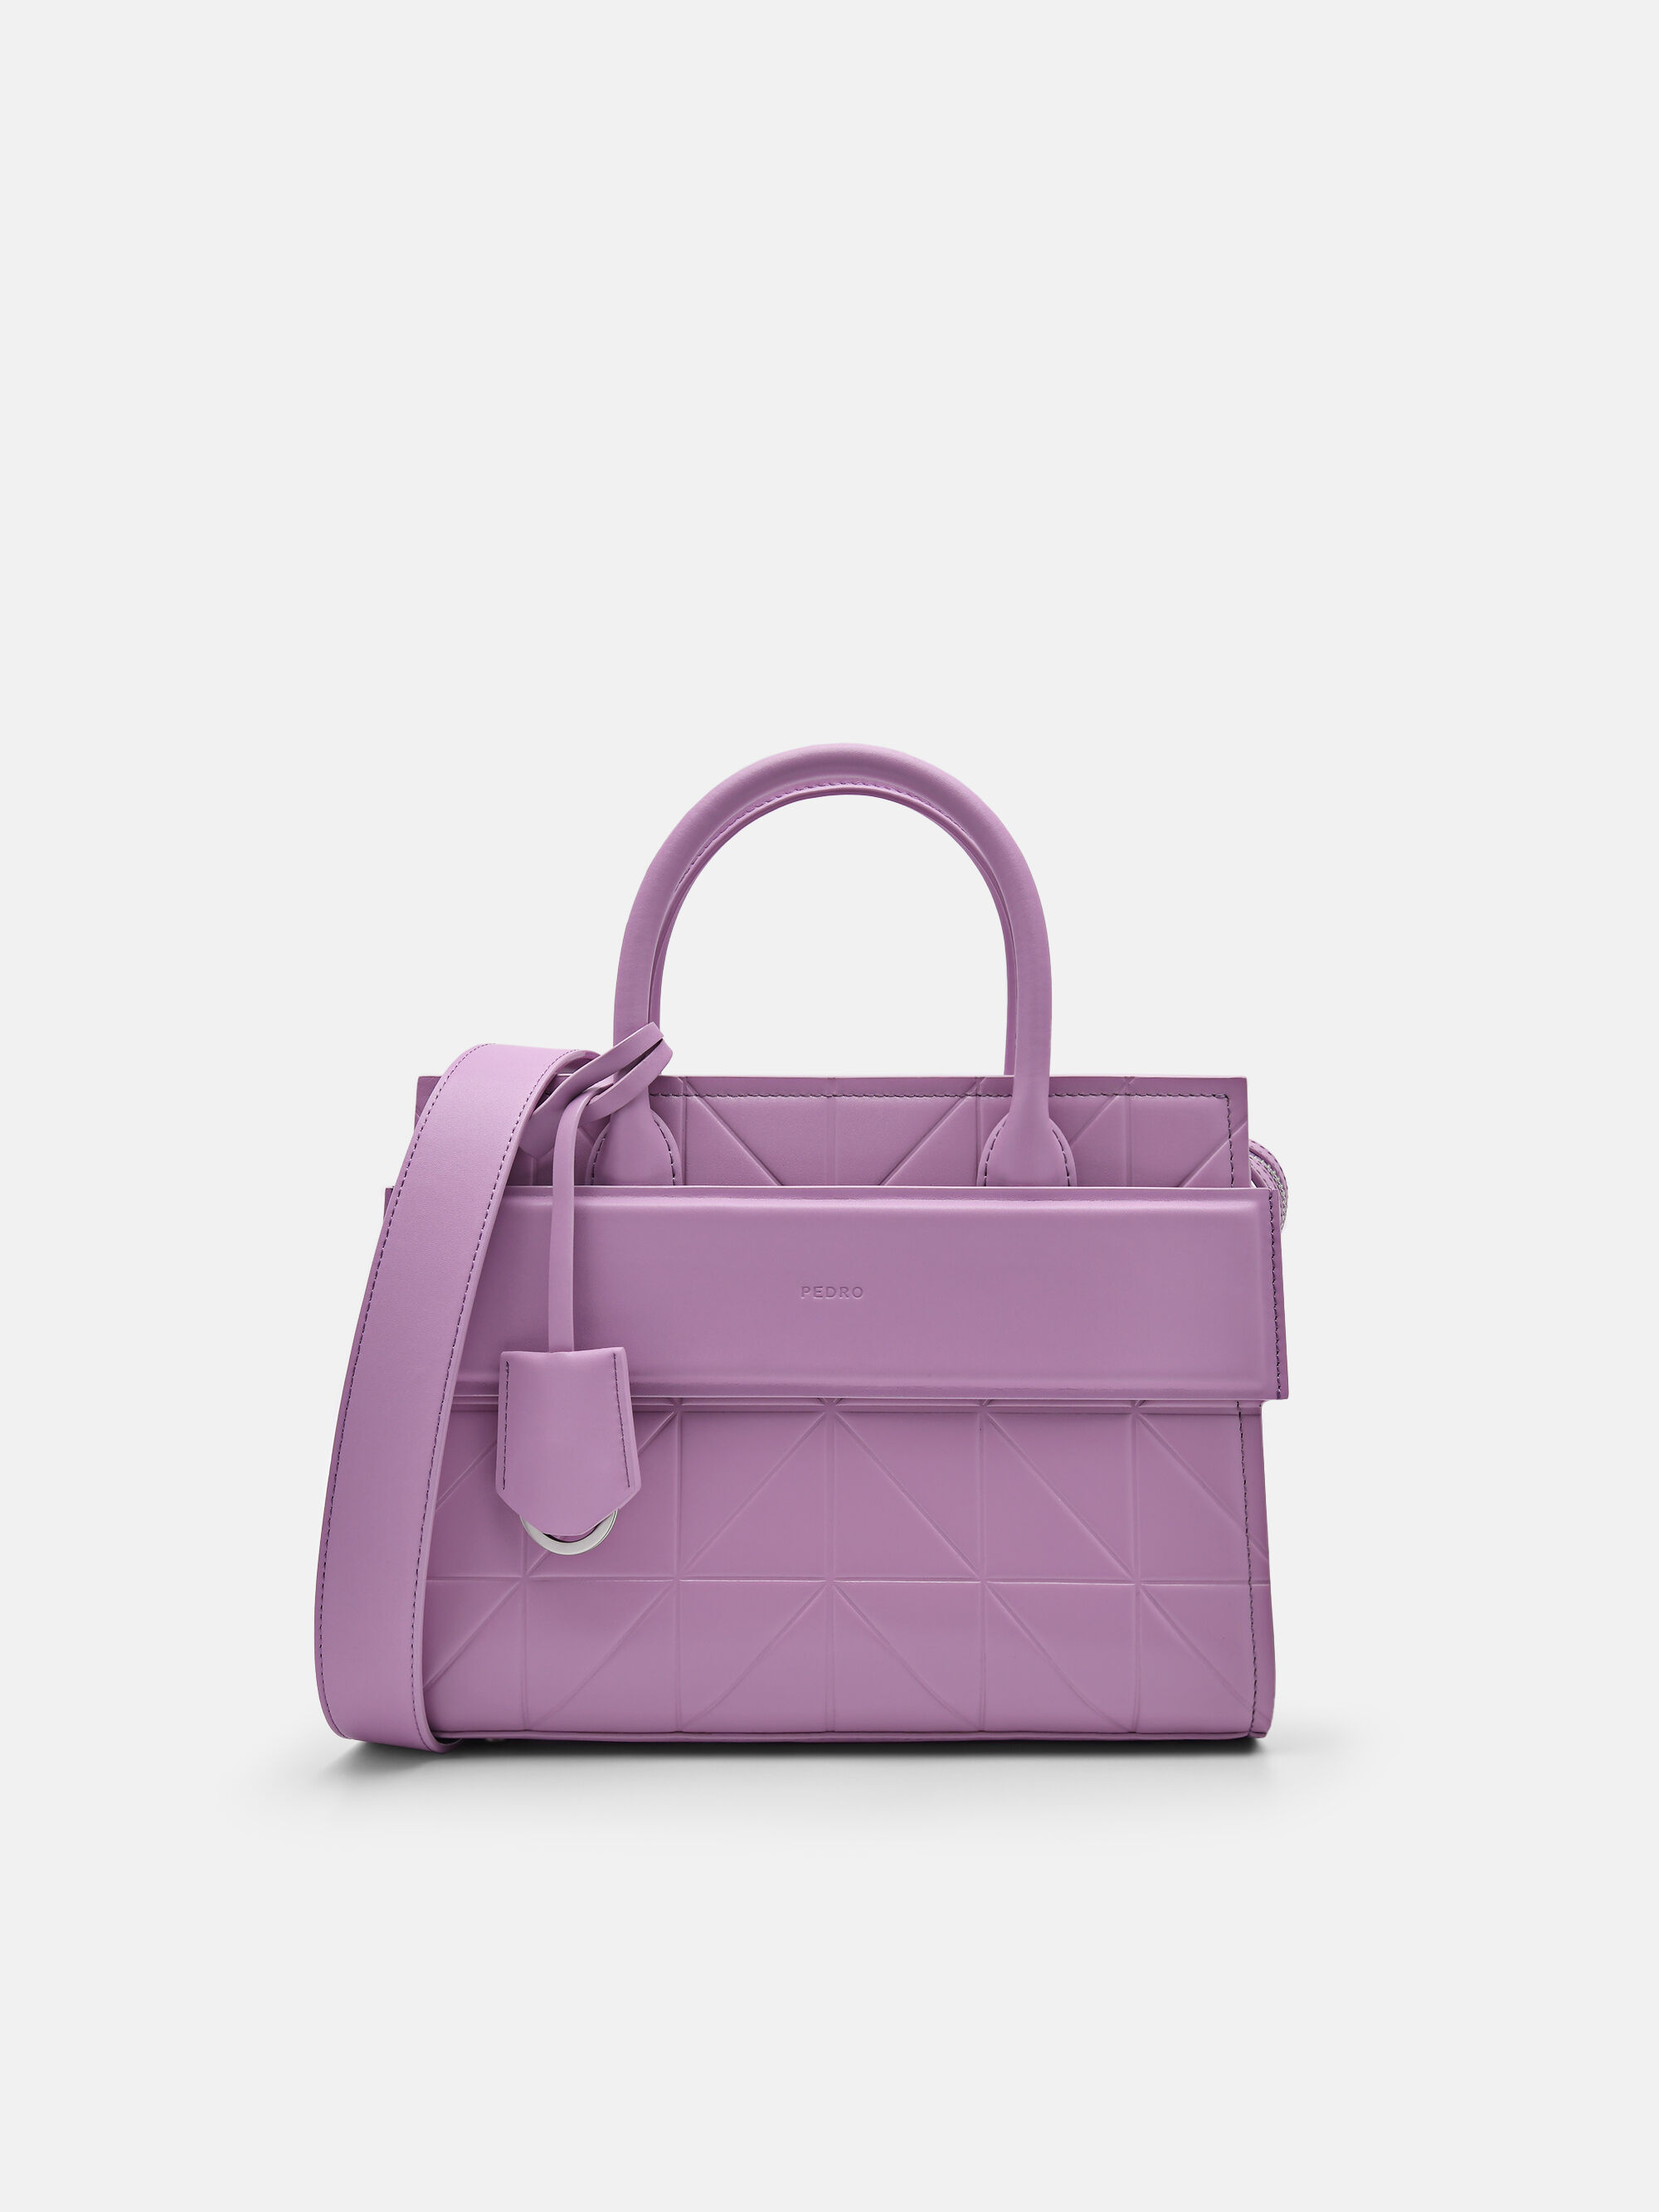 PEDRO Studio Bella Leather Handbag in Pixel, Purple